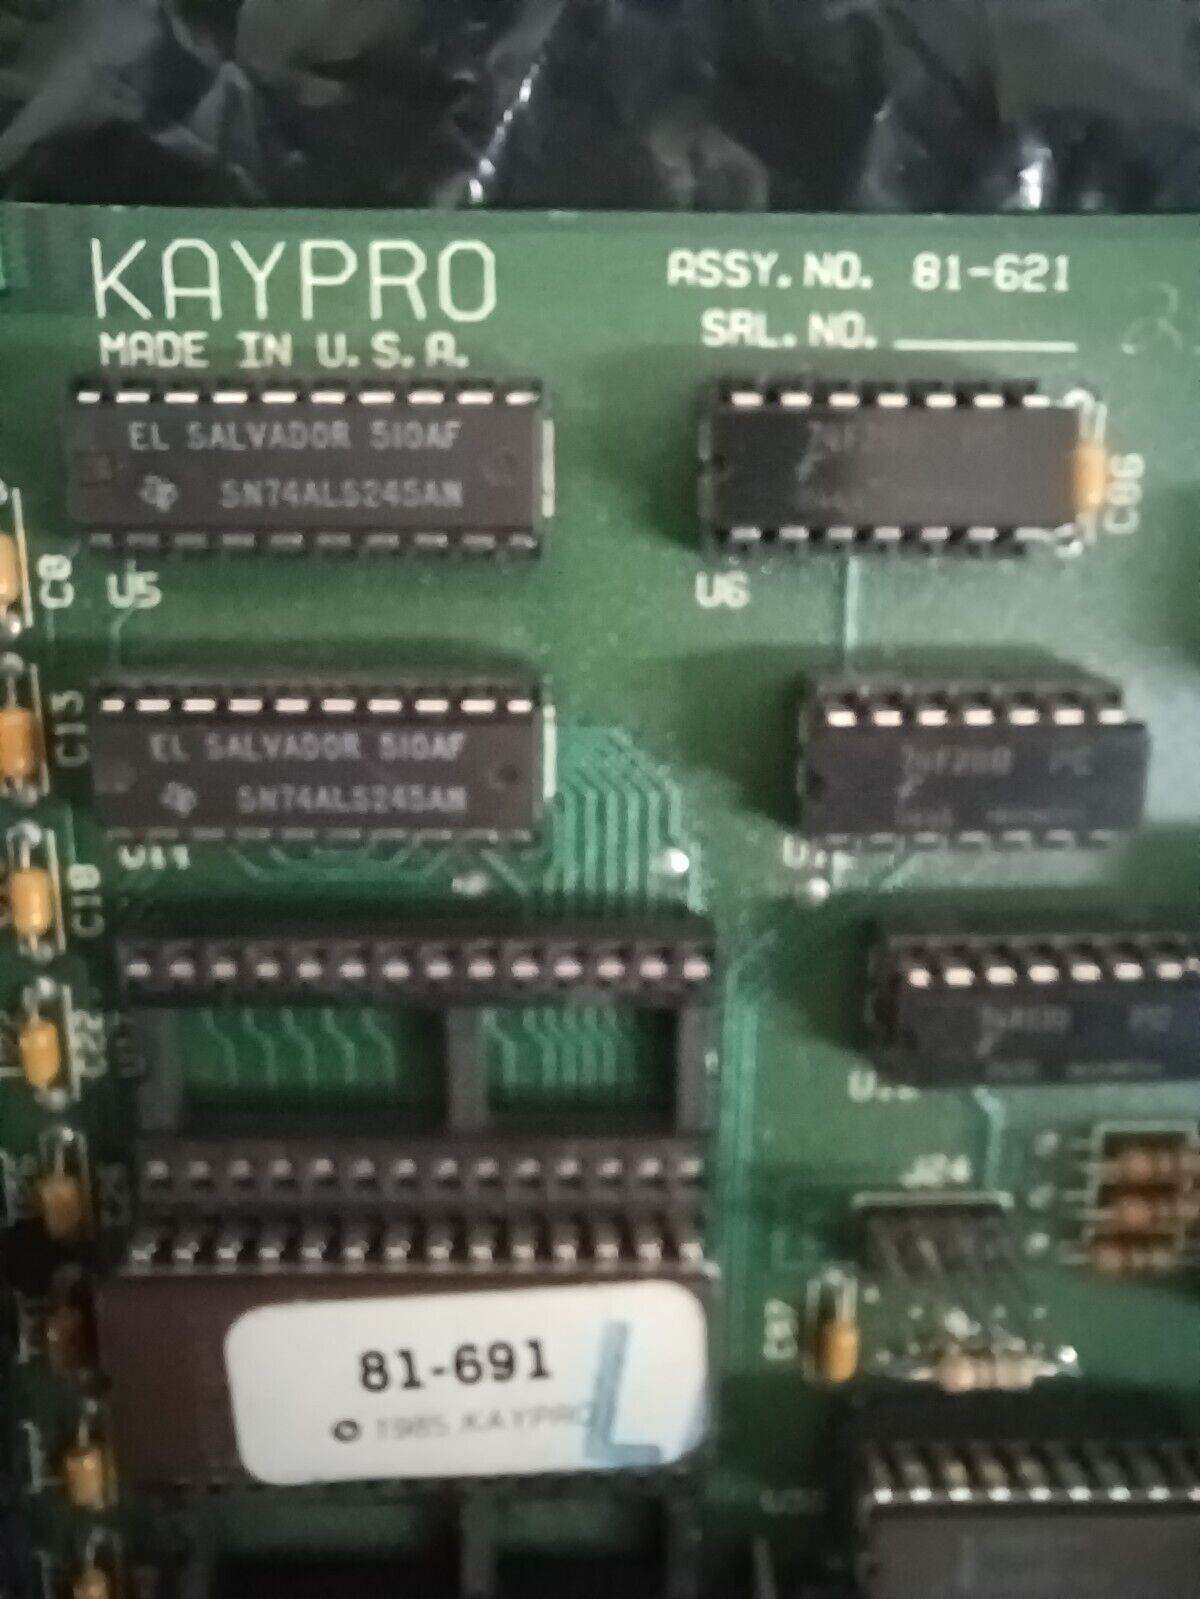 Vintage Rare KAYPRO 286i Motherboard 81-621 512K Ram Memory Intel C80286-6 CPU